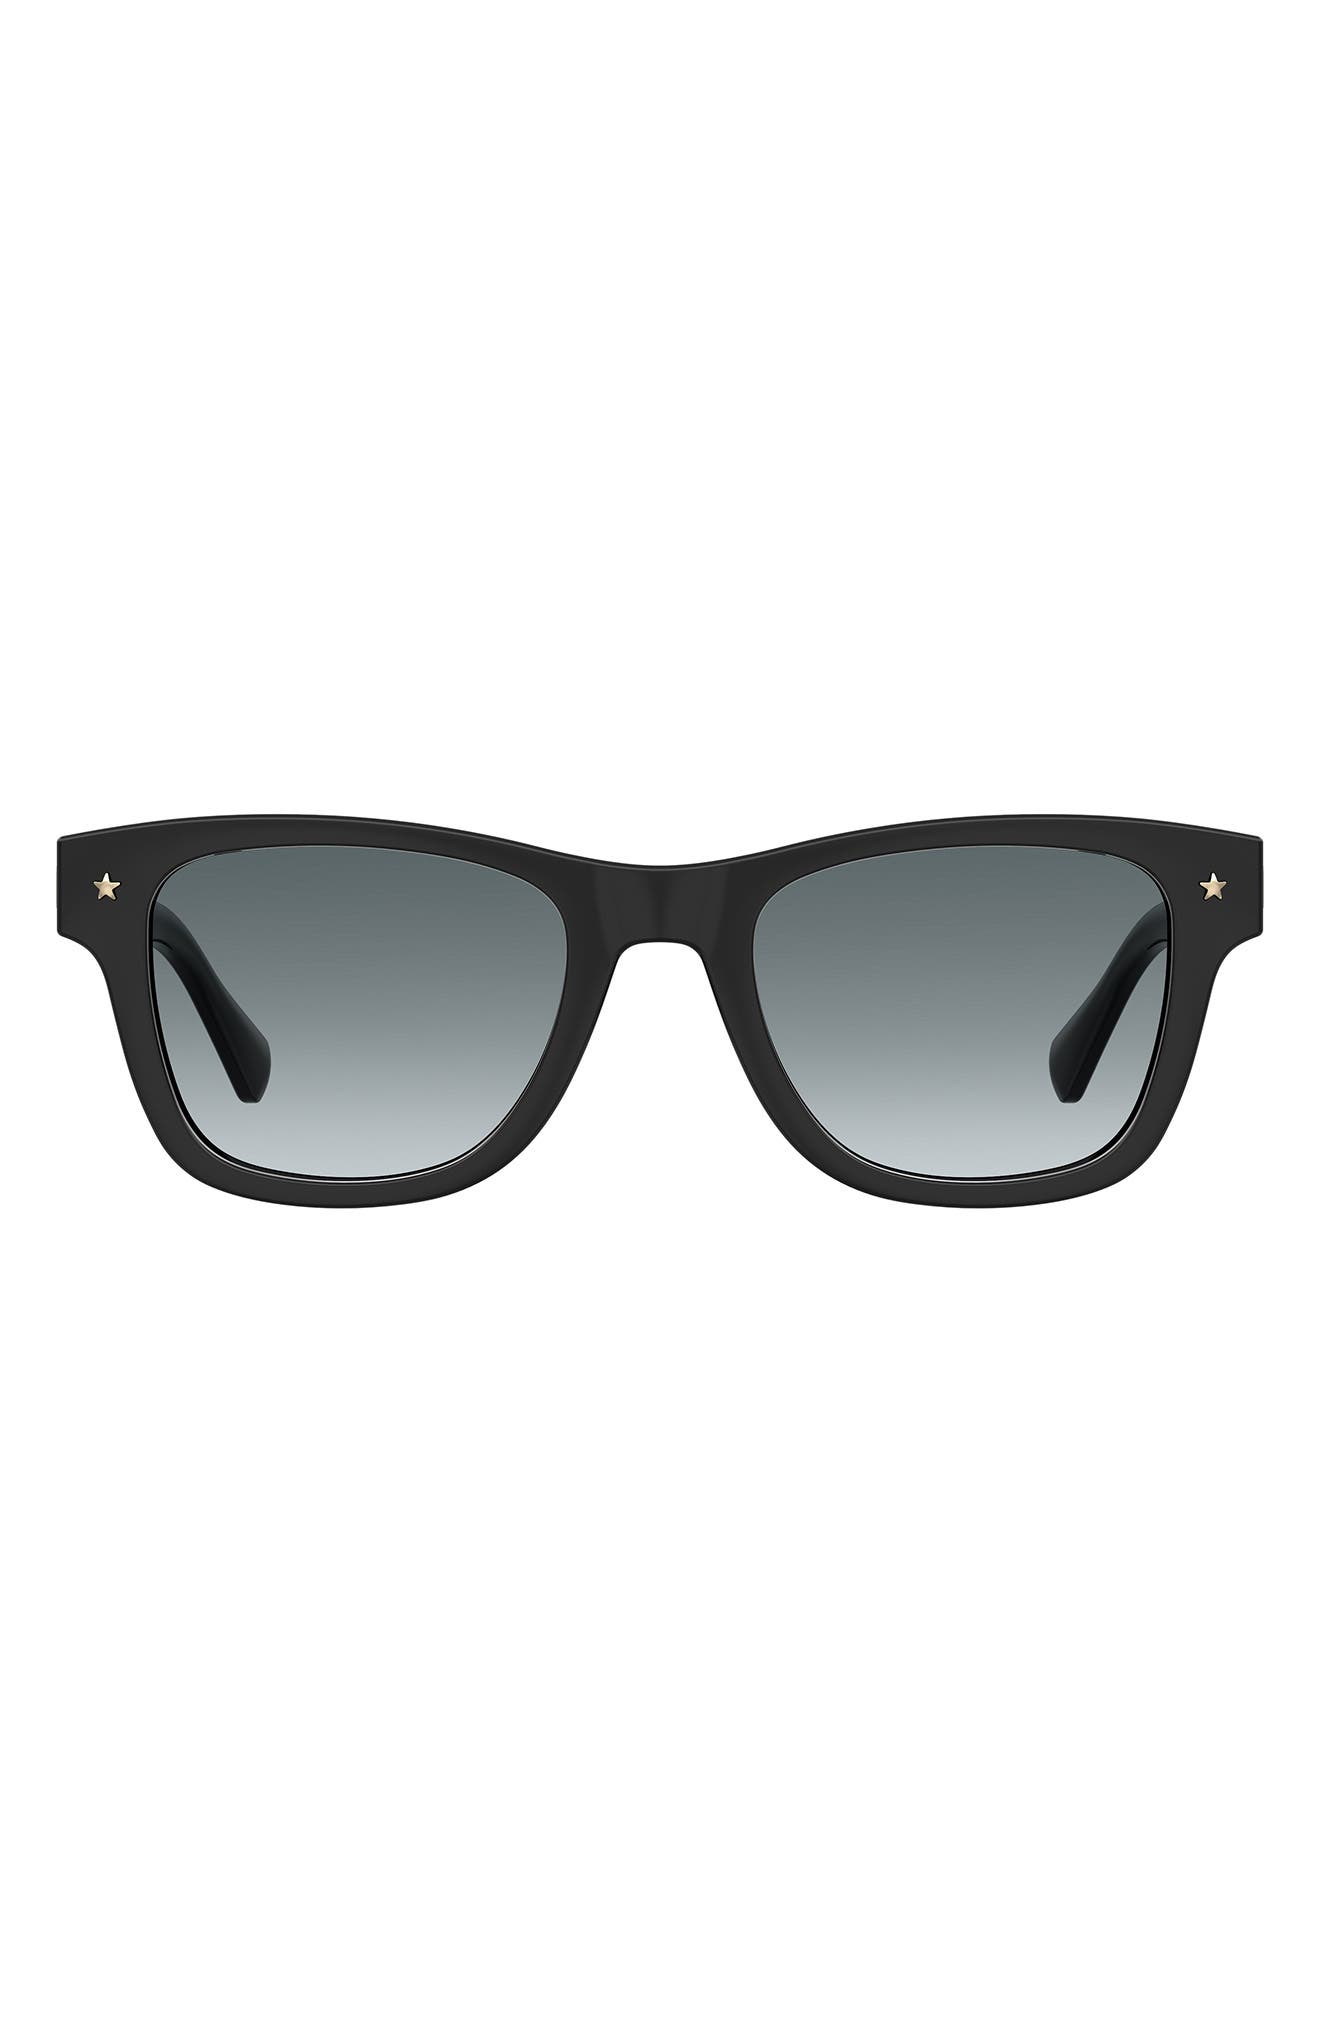 CHIARA FERRAGNI 50mm Square Sunglasses in Black/Grey Shaded at Nordstrom